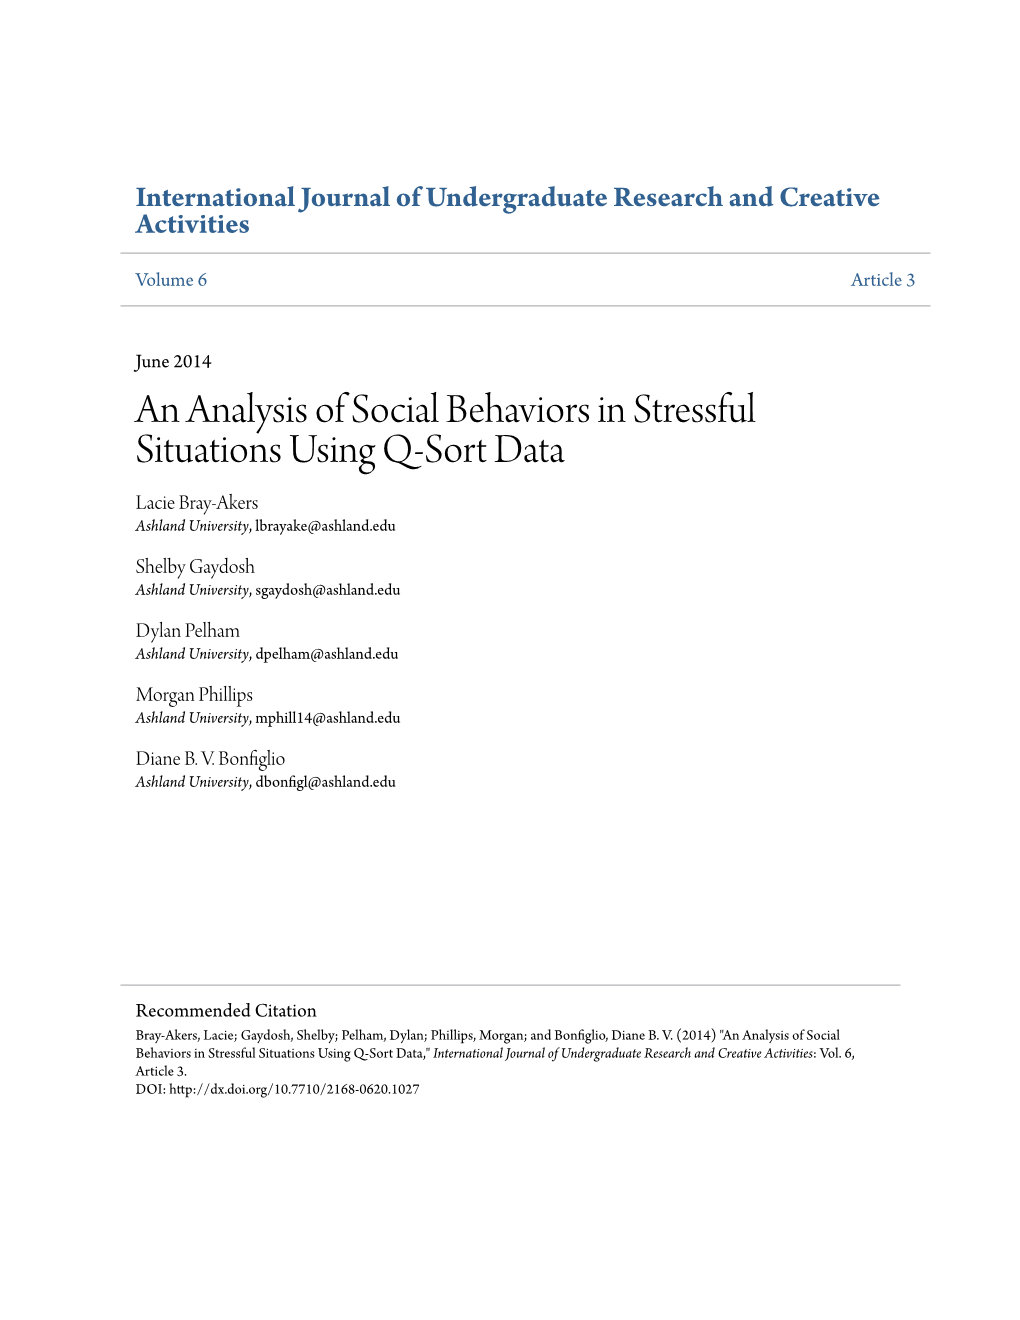 An Analysis of Social Behaviors in Stressful Situations Using Q-Sort Data Lacie Bray-Akers Ashland University, Lbrayake@Ashland.Edu